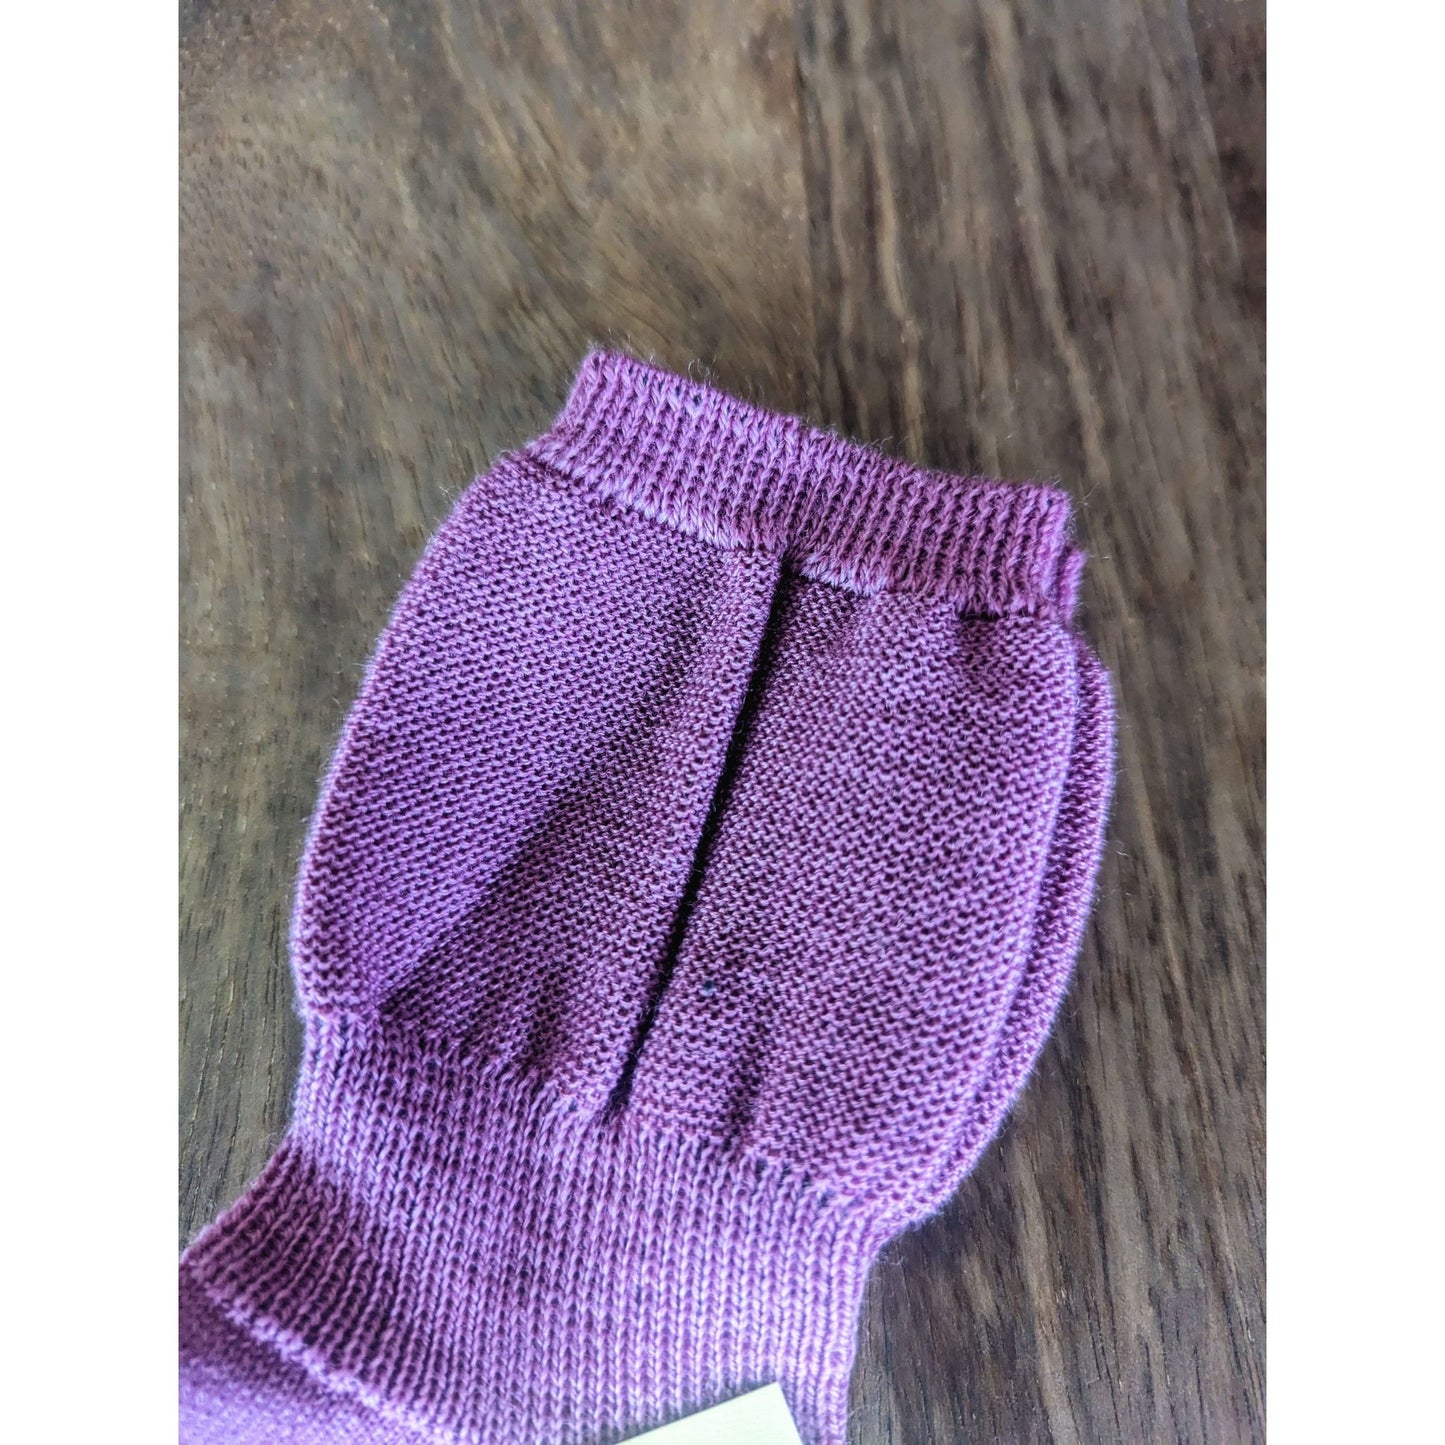 Grodo - Organic Wool Baby Socks - All Season - Nature's Wild Child